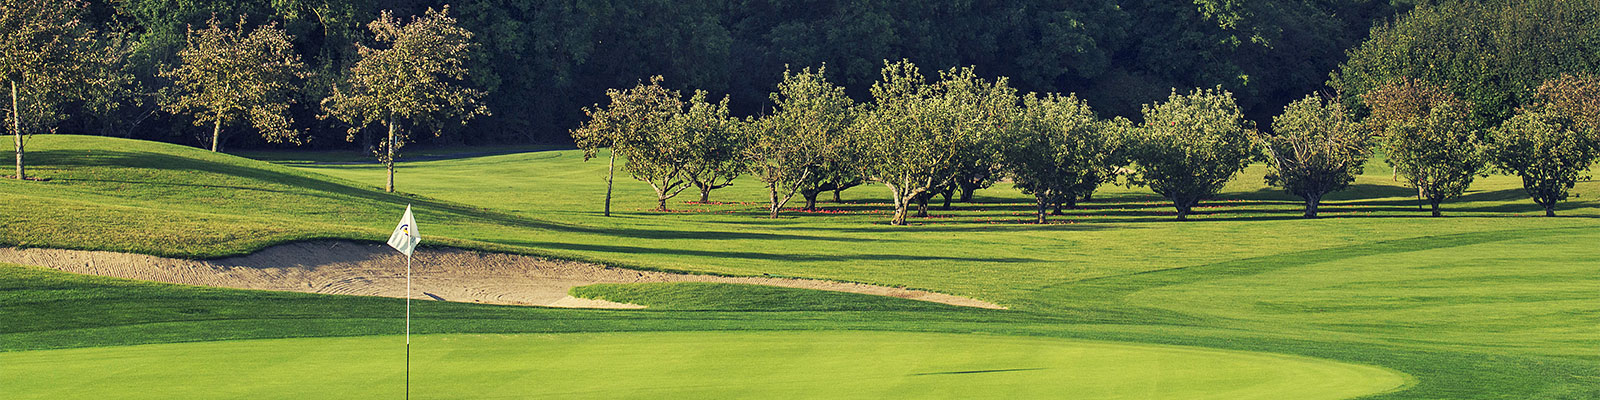 Grange Castle Golf Course Banner Image